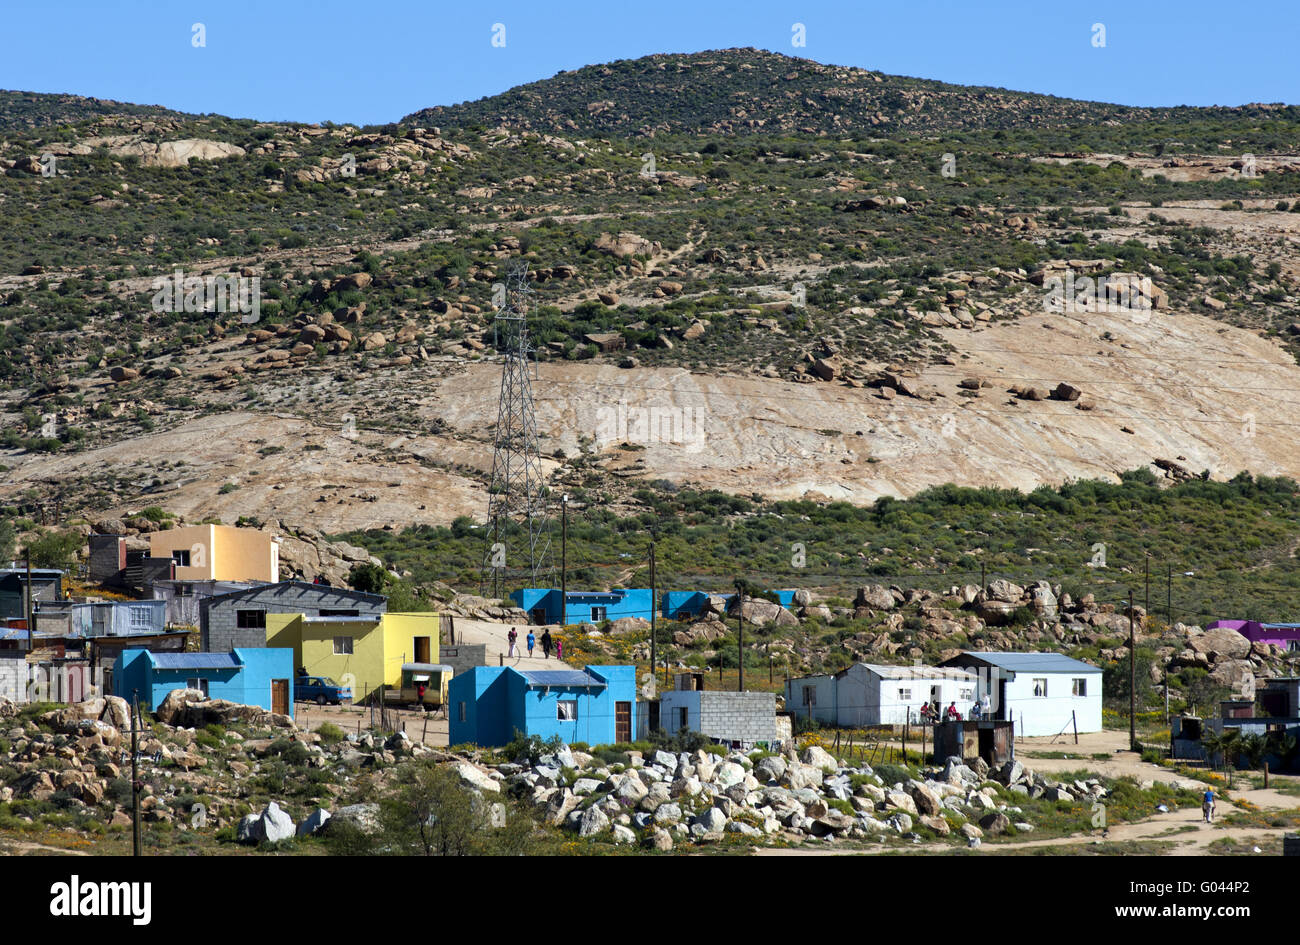 neighbourhood of black South Africans, Springbok Stock Photo